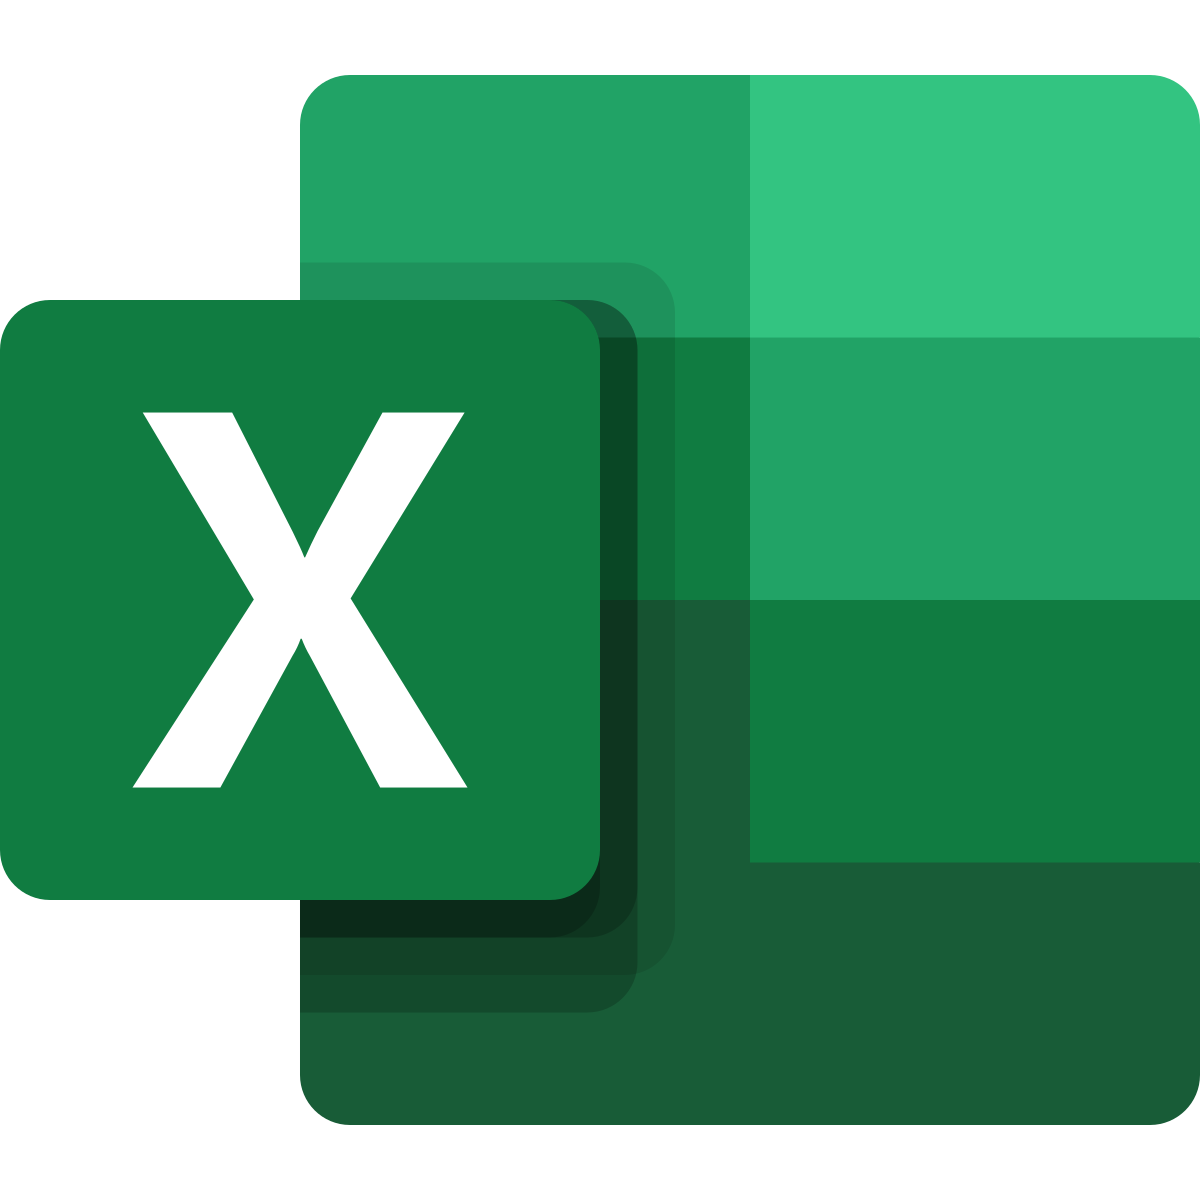 Image logo for Excel.